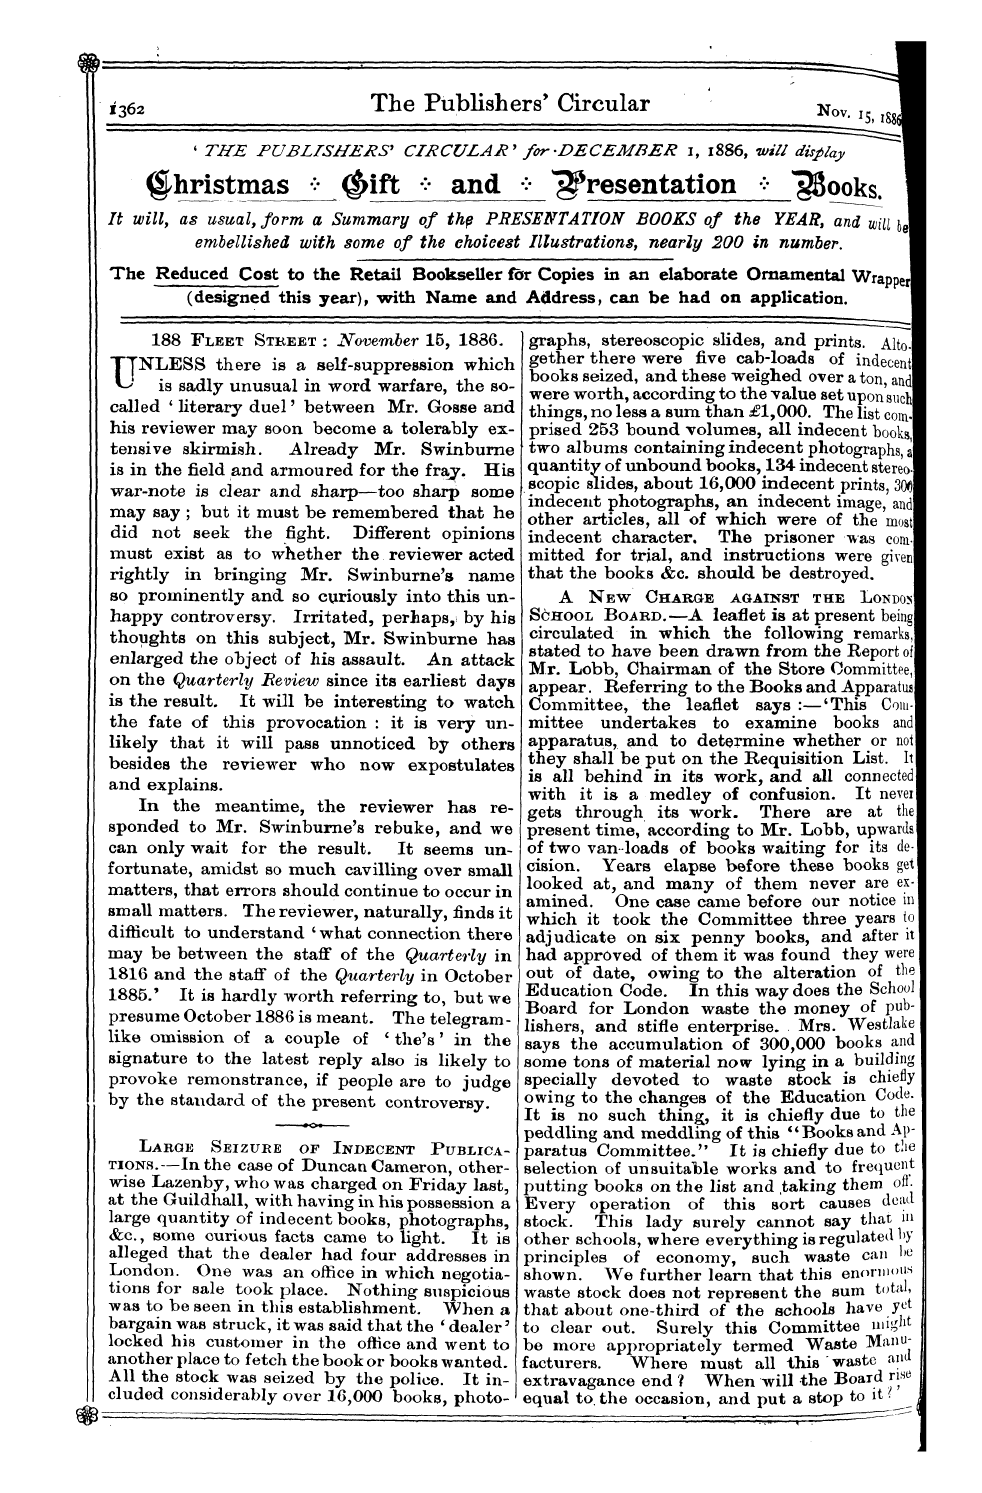 Publishers’ Circular (1880-1890): jS F Y, 1st edition - 188 Fleet Stbeet : November 151886 , -